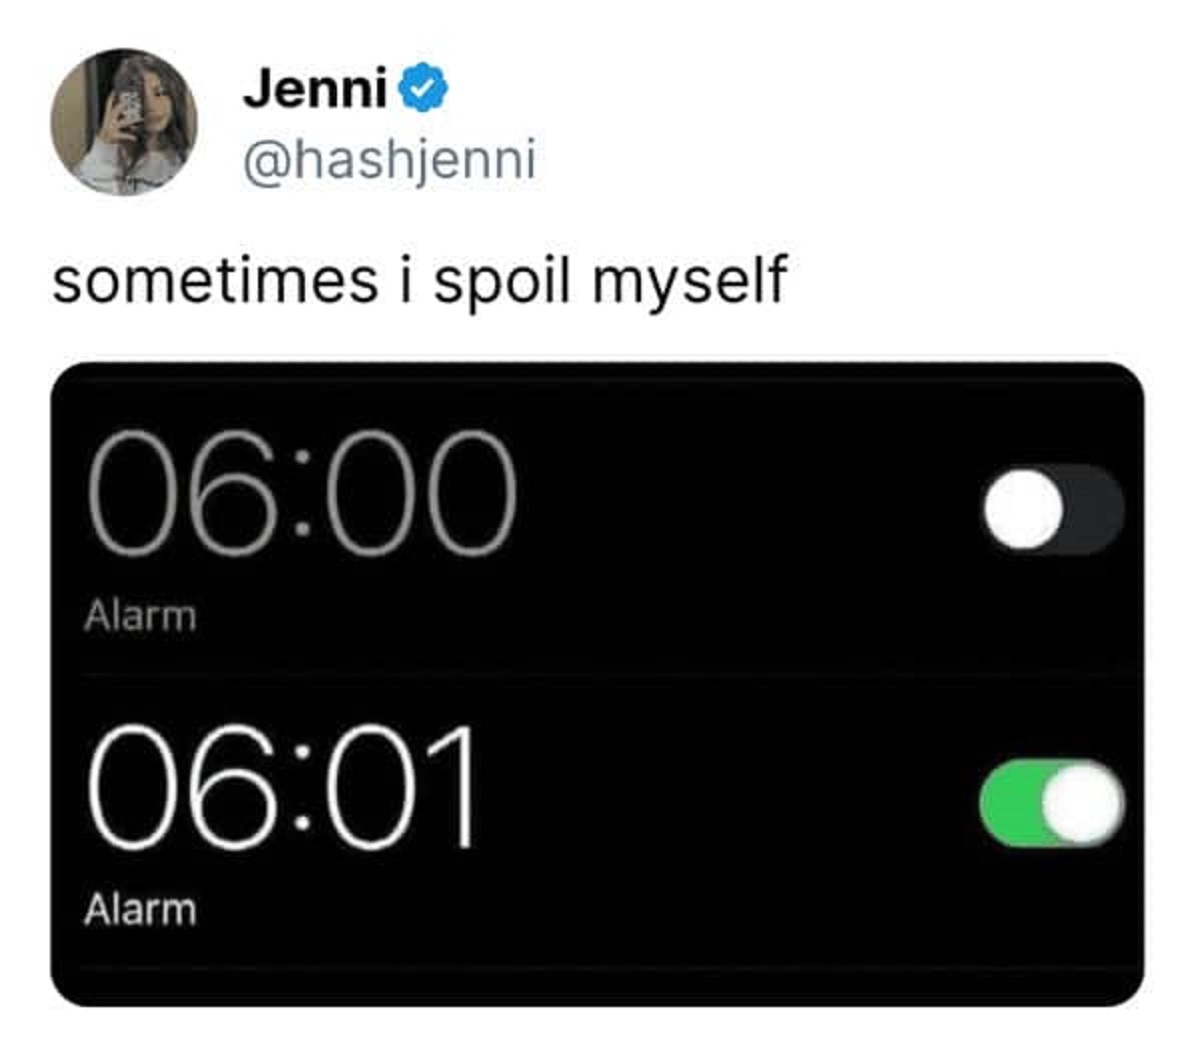 screenshot - Jenni sometimes i spoil myself Alarm Alarm